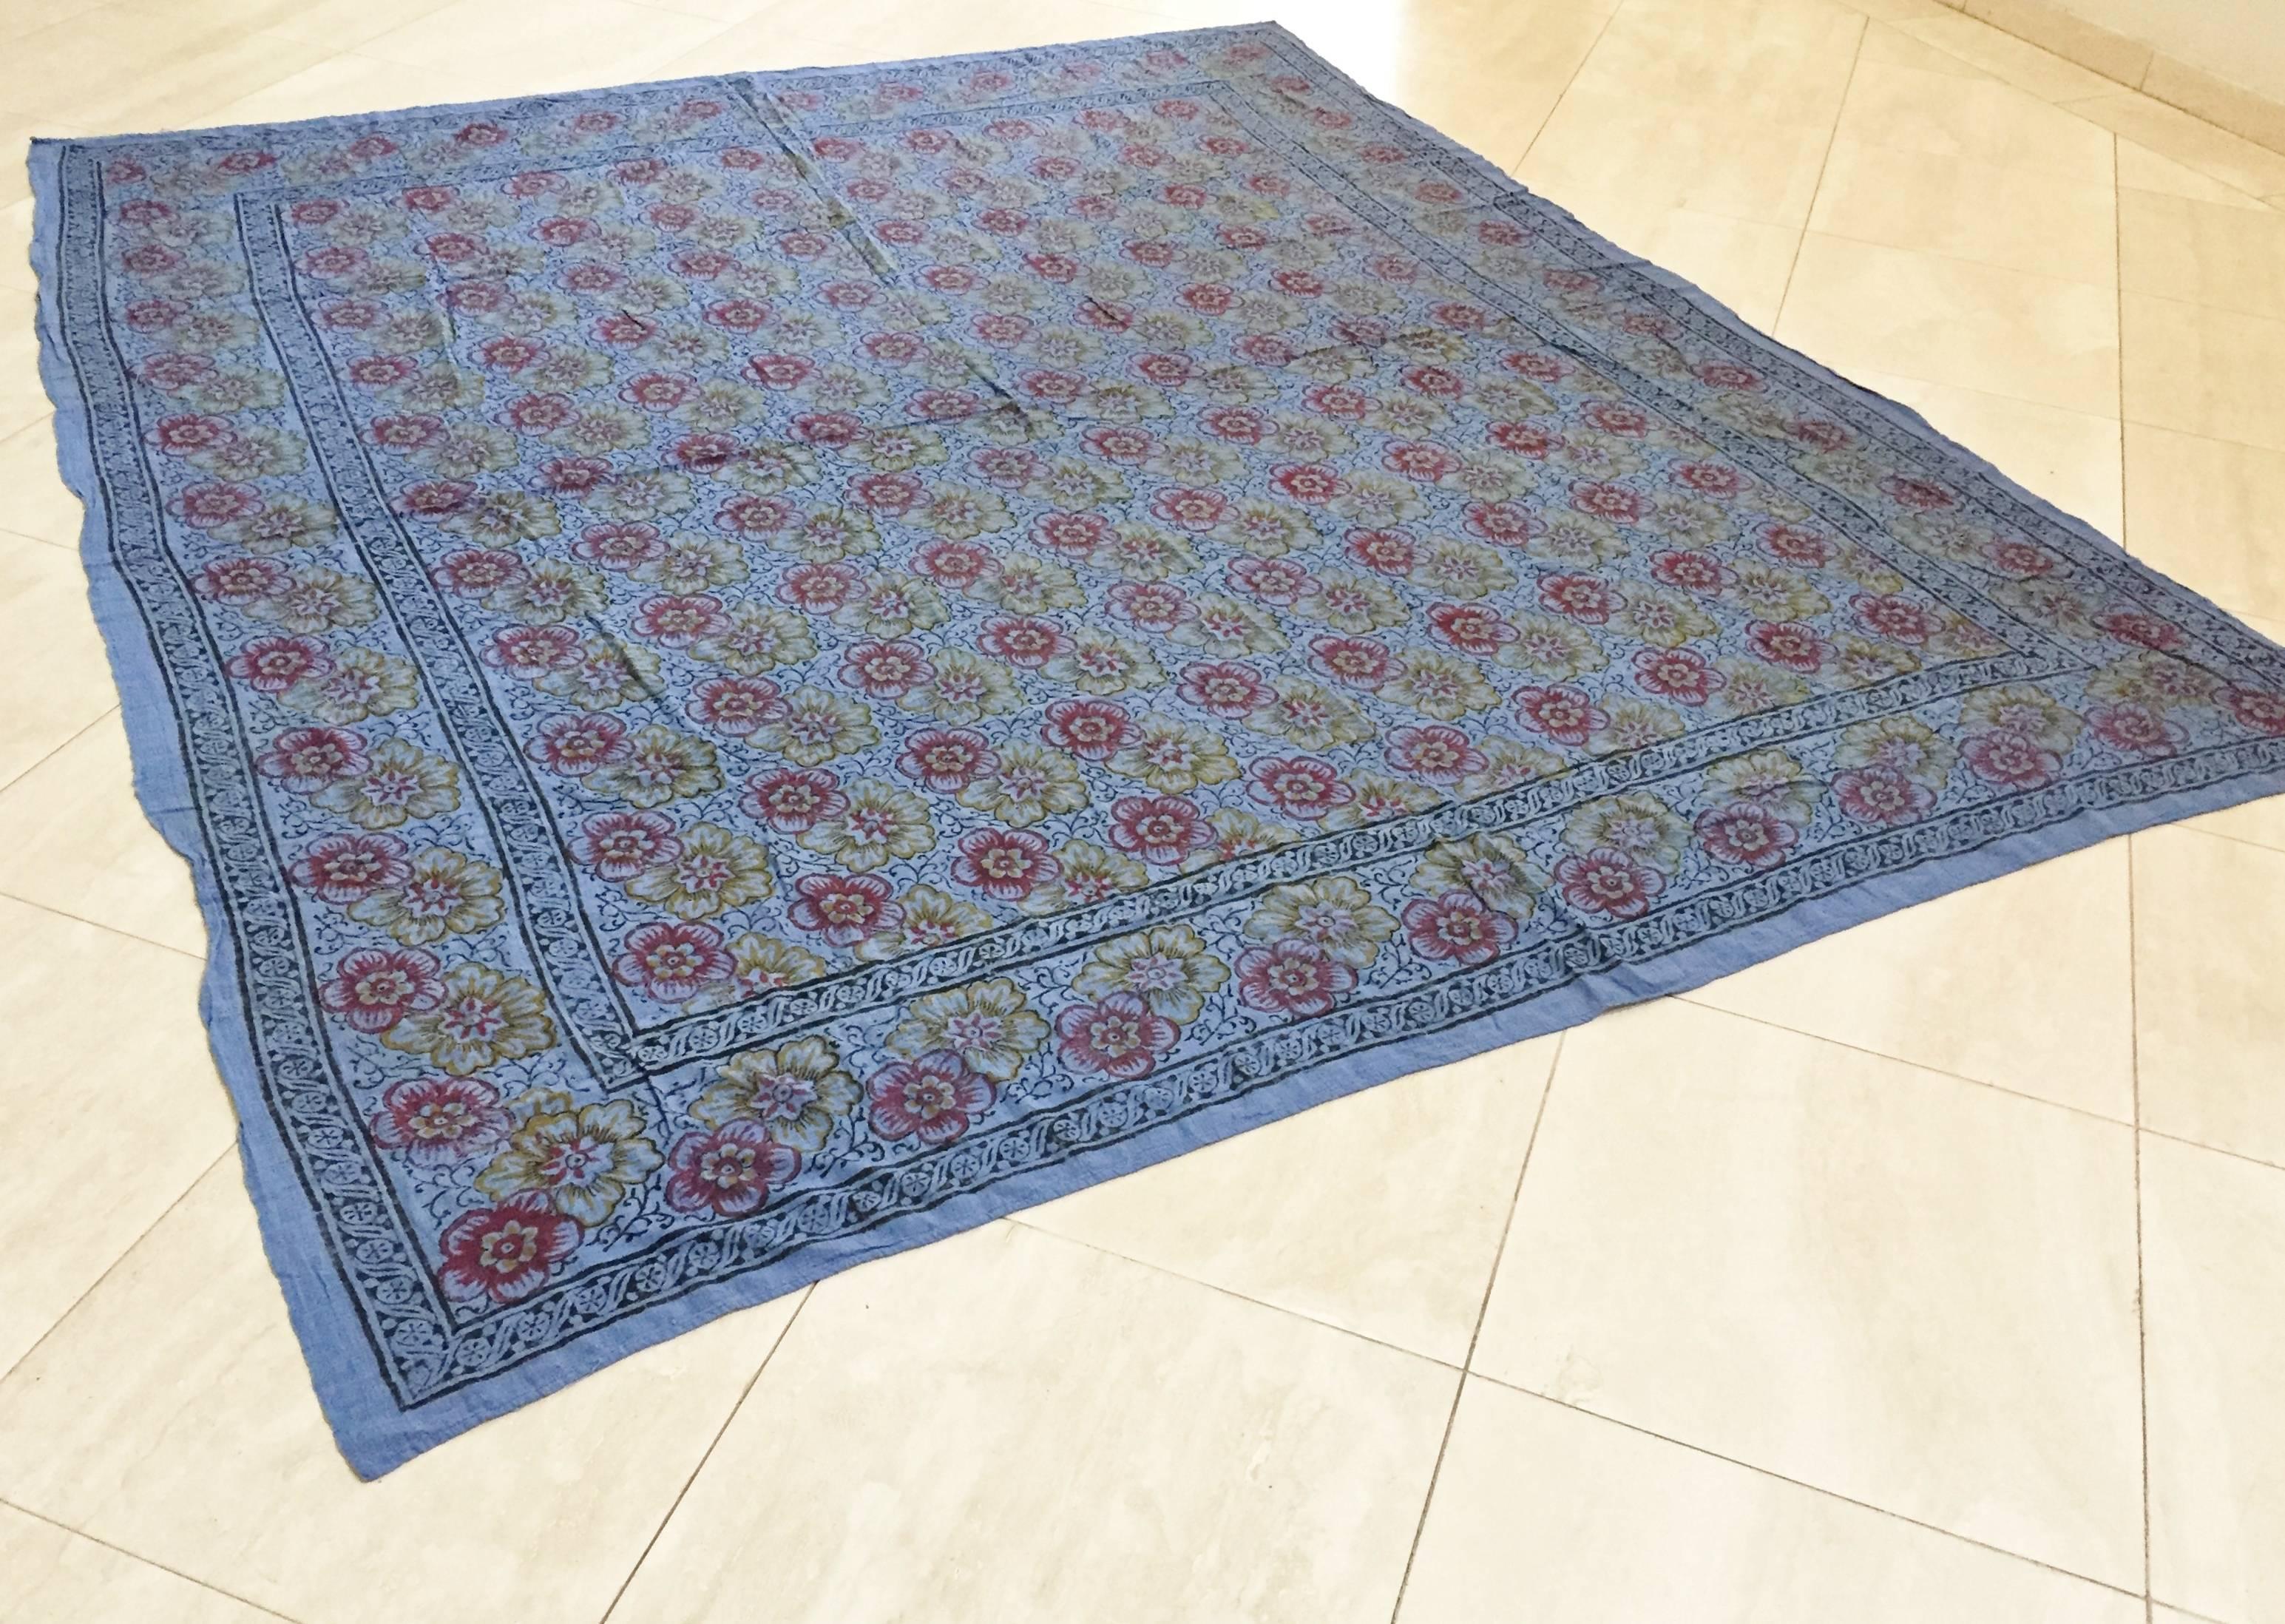 Anglo-Indian Kalamari Blue Textile from India